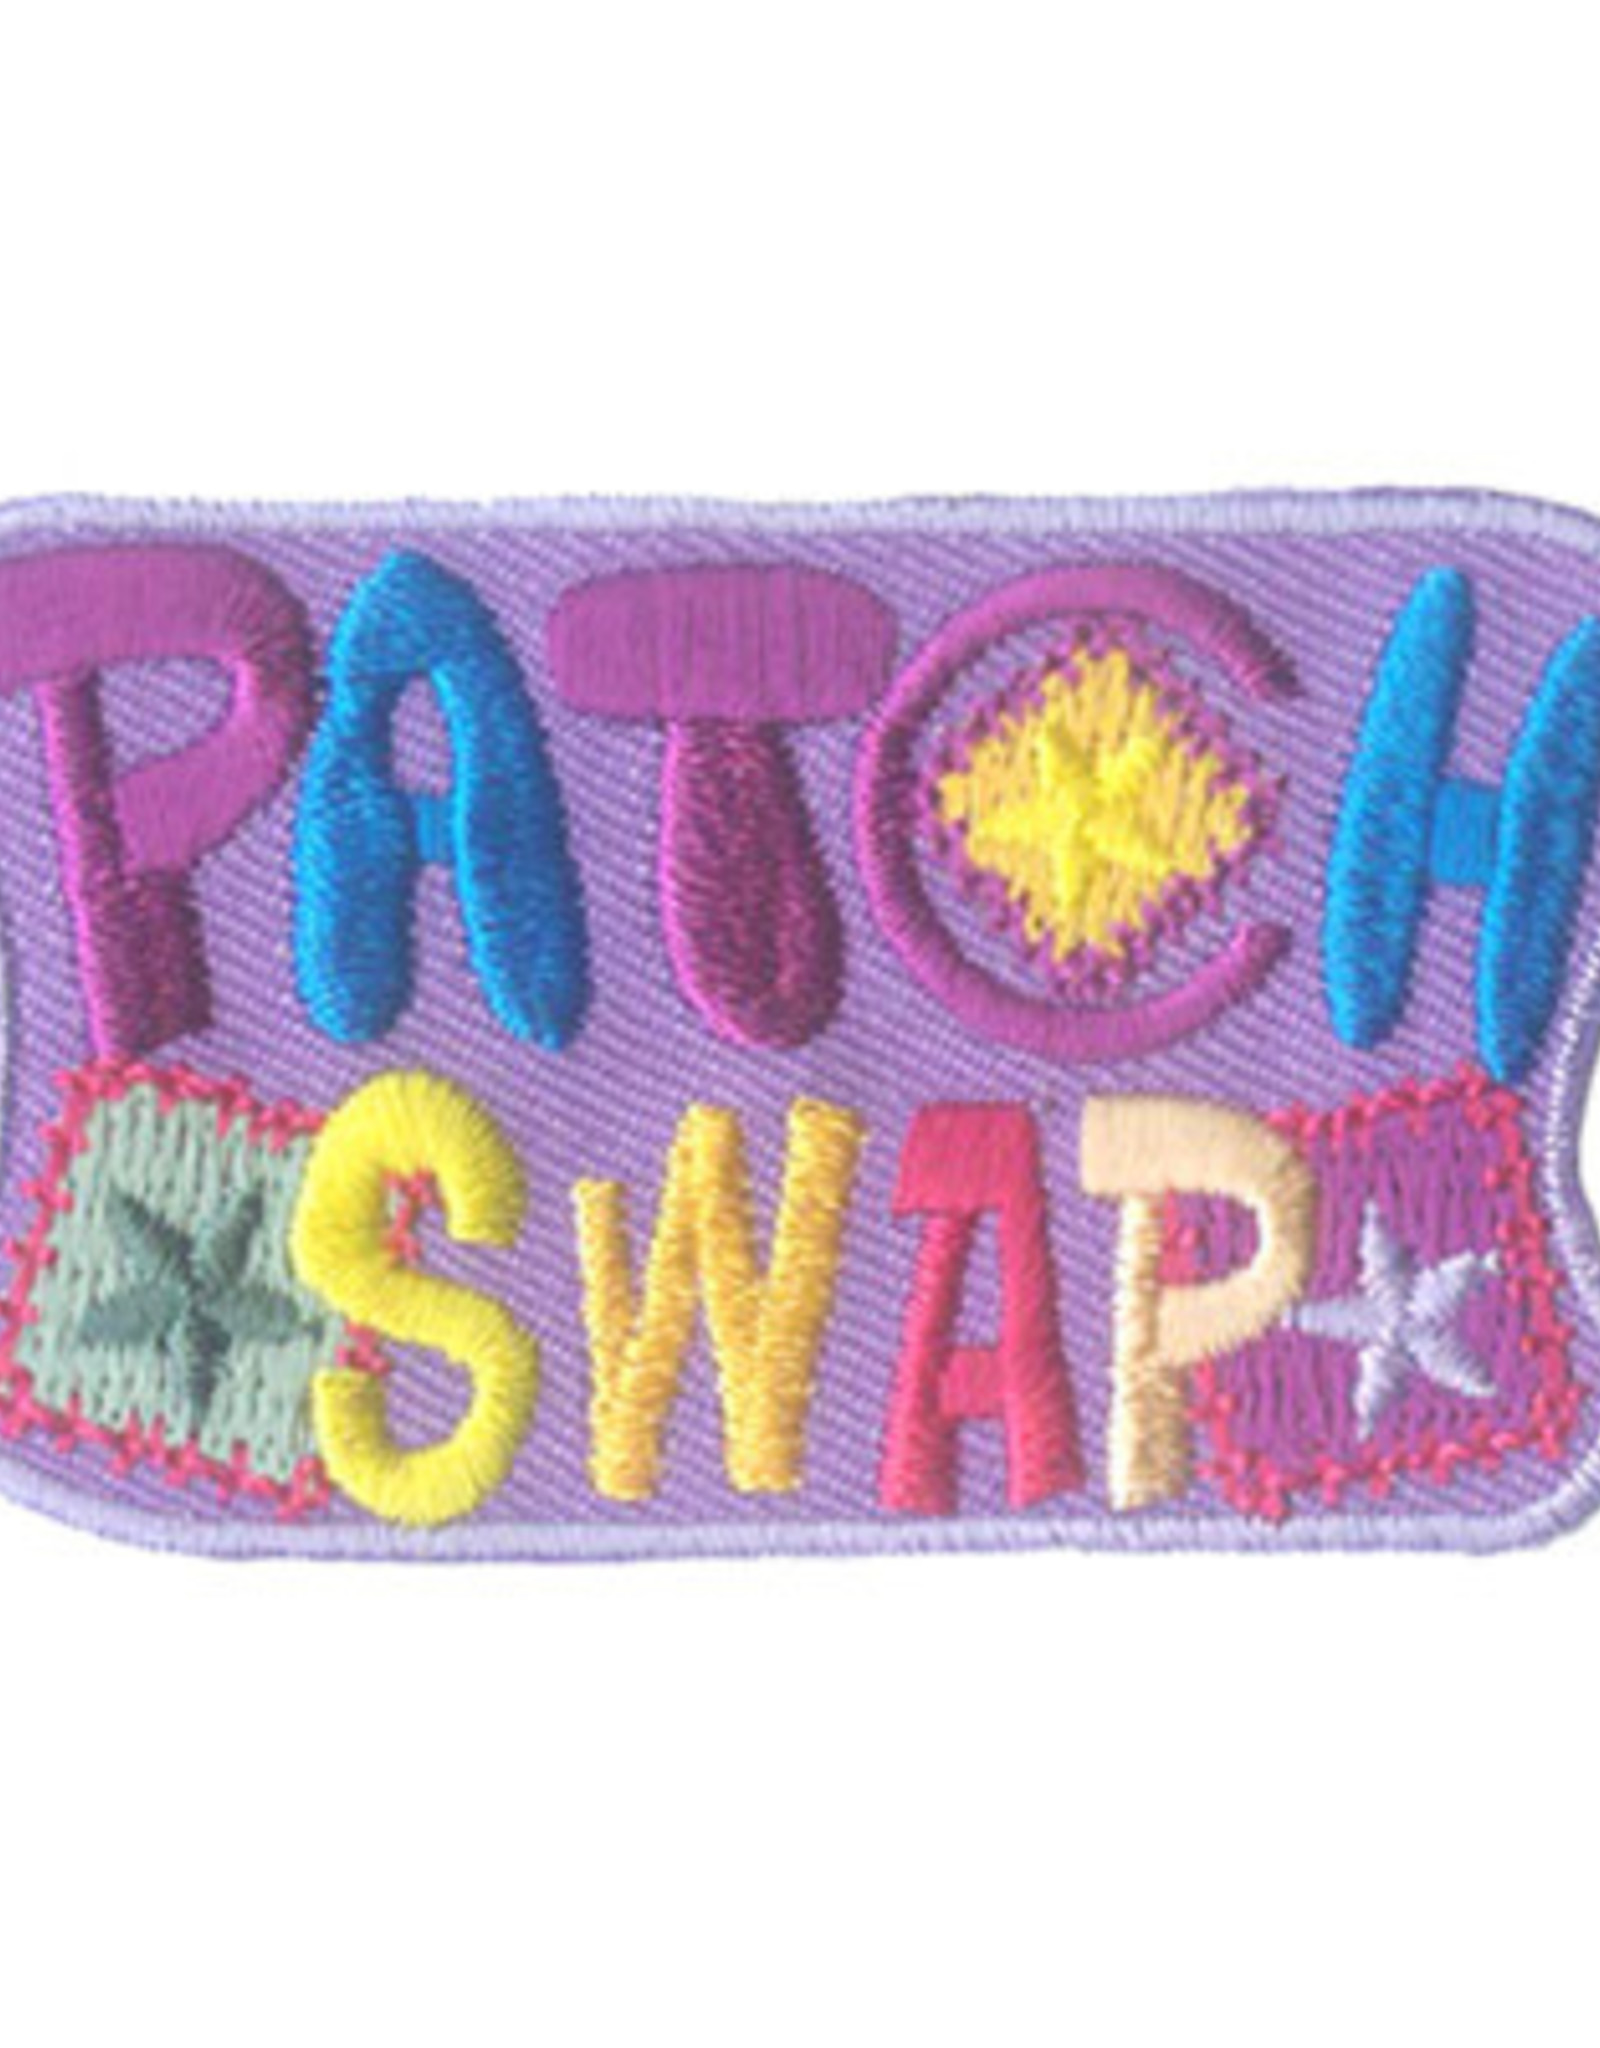 Advantage Emblem & Screen Prnt Patch Swap Fun Patch